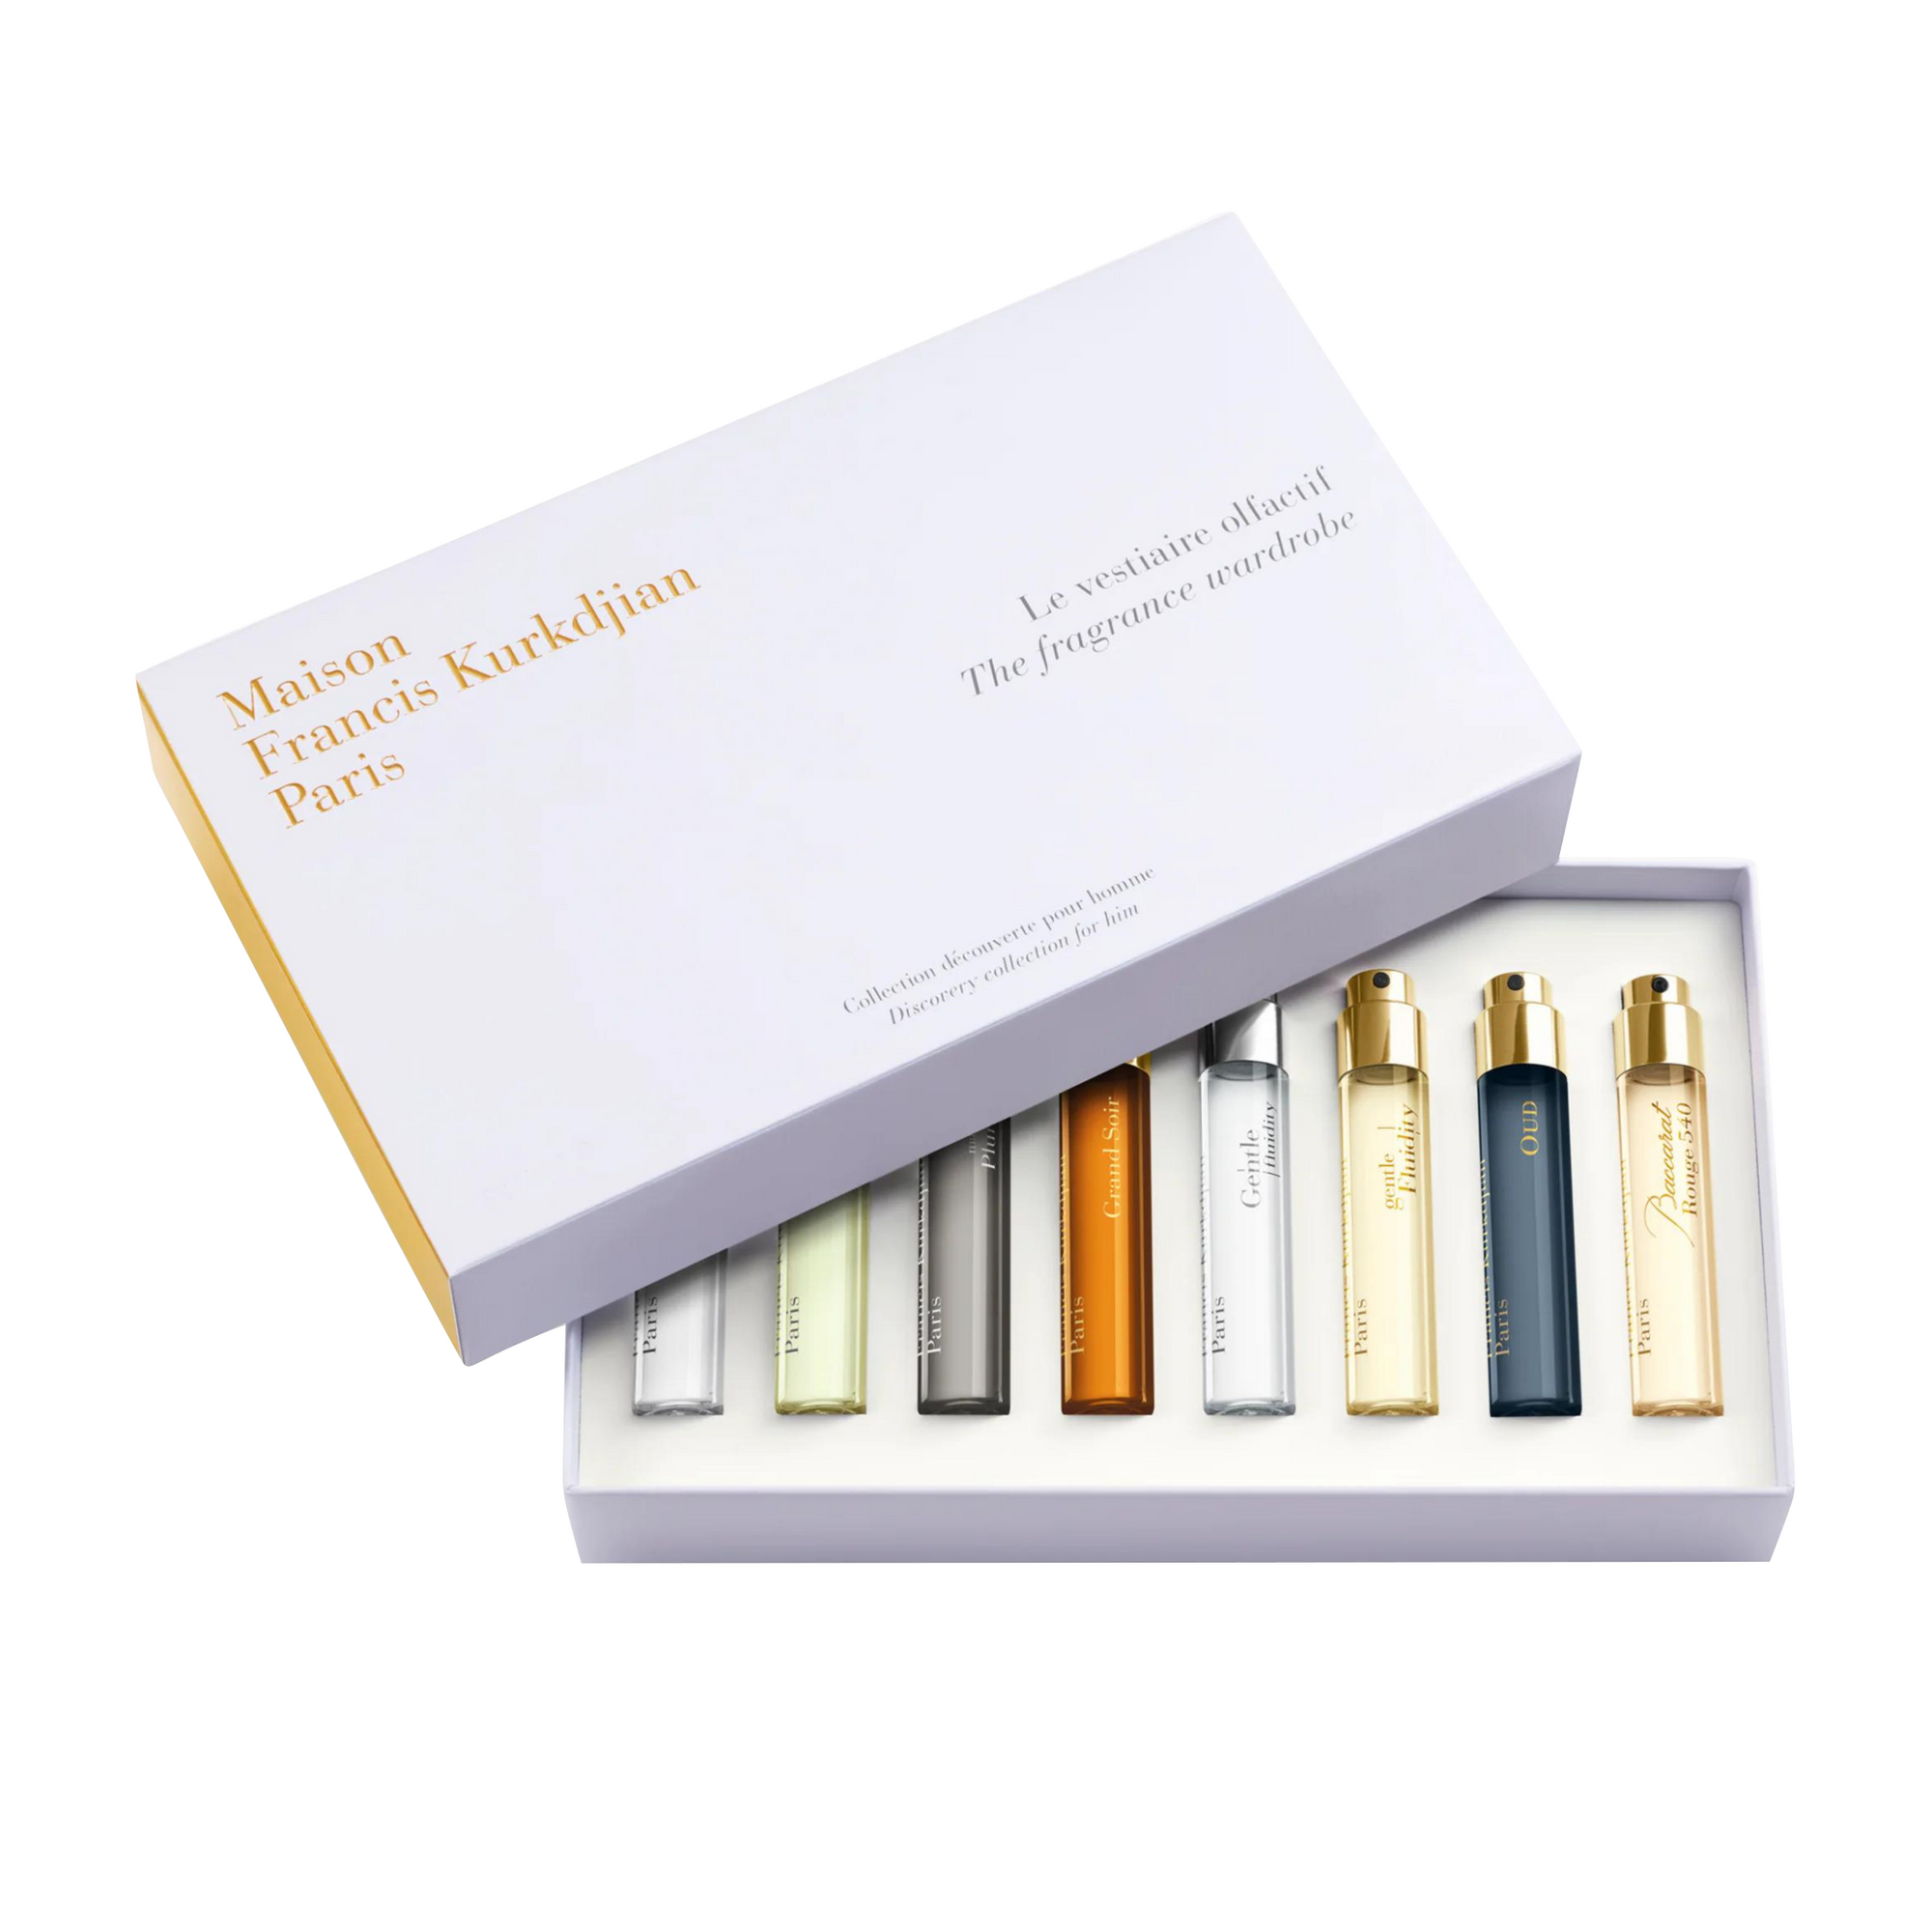 OUD Collection - Fragrances - Maison Francis Kurkdjian